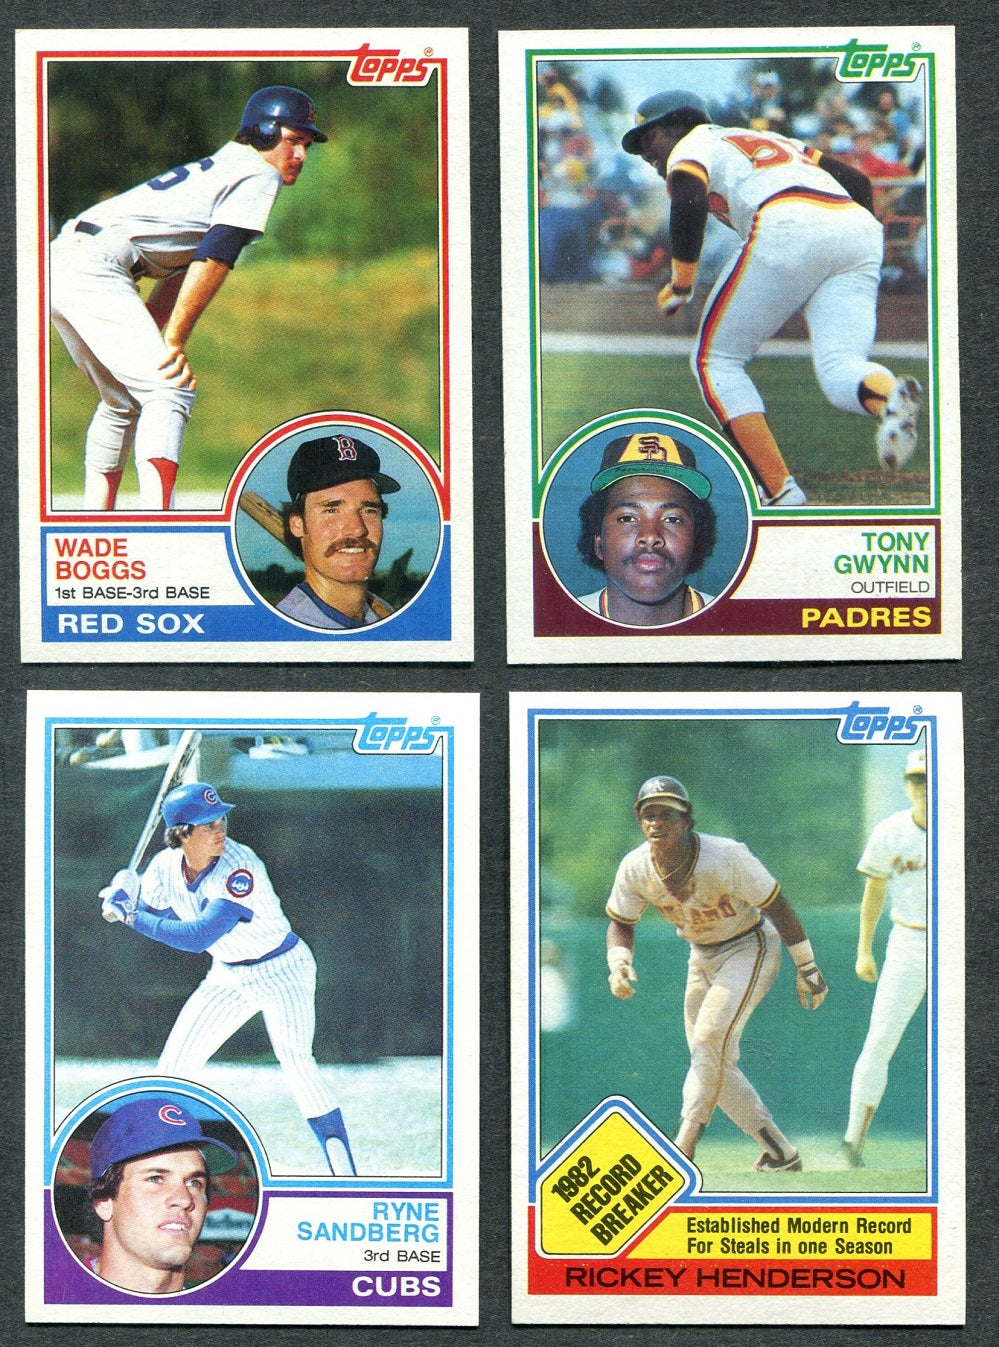 1983 Topps Baseball Complete Set NM NM/MT (792) (23-327)